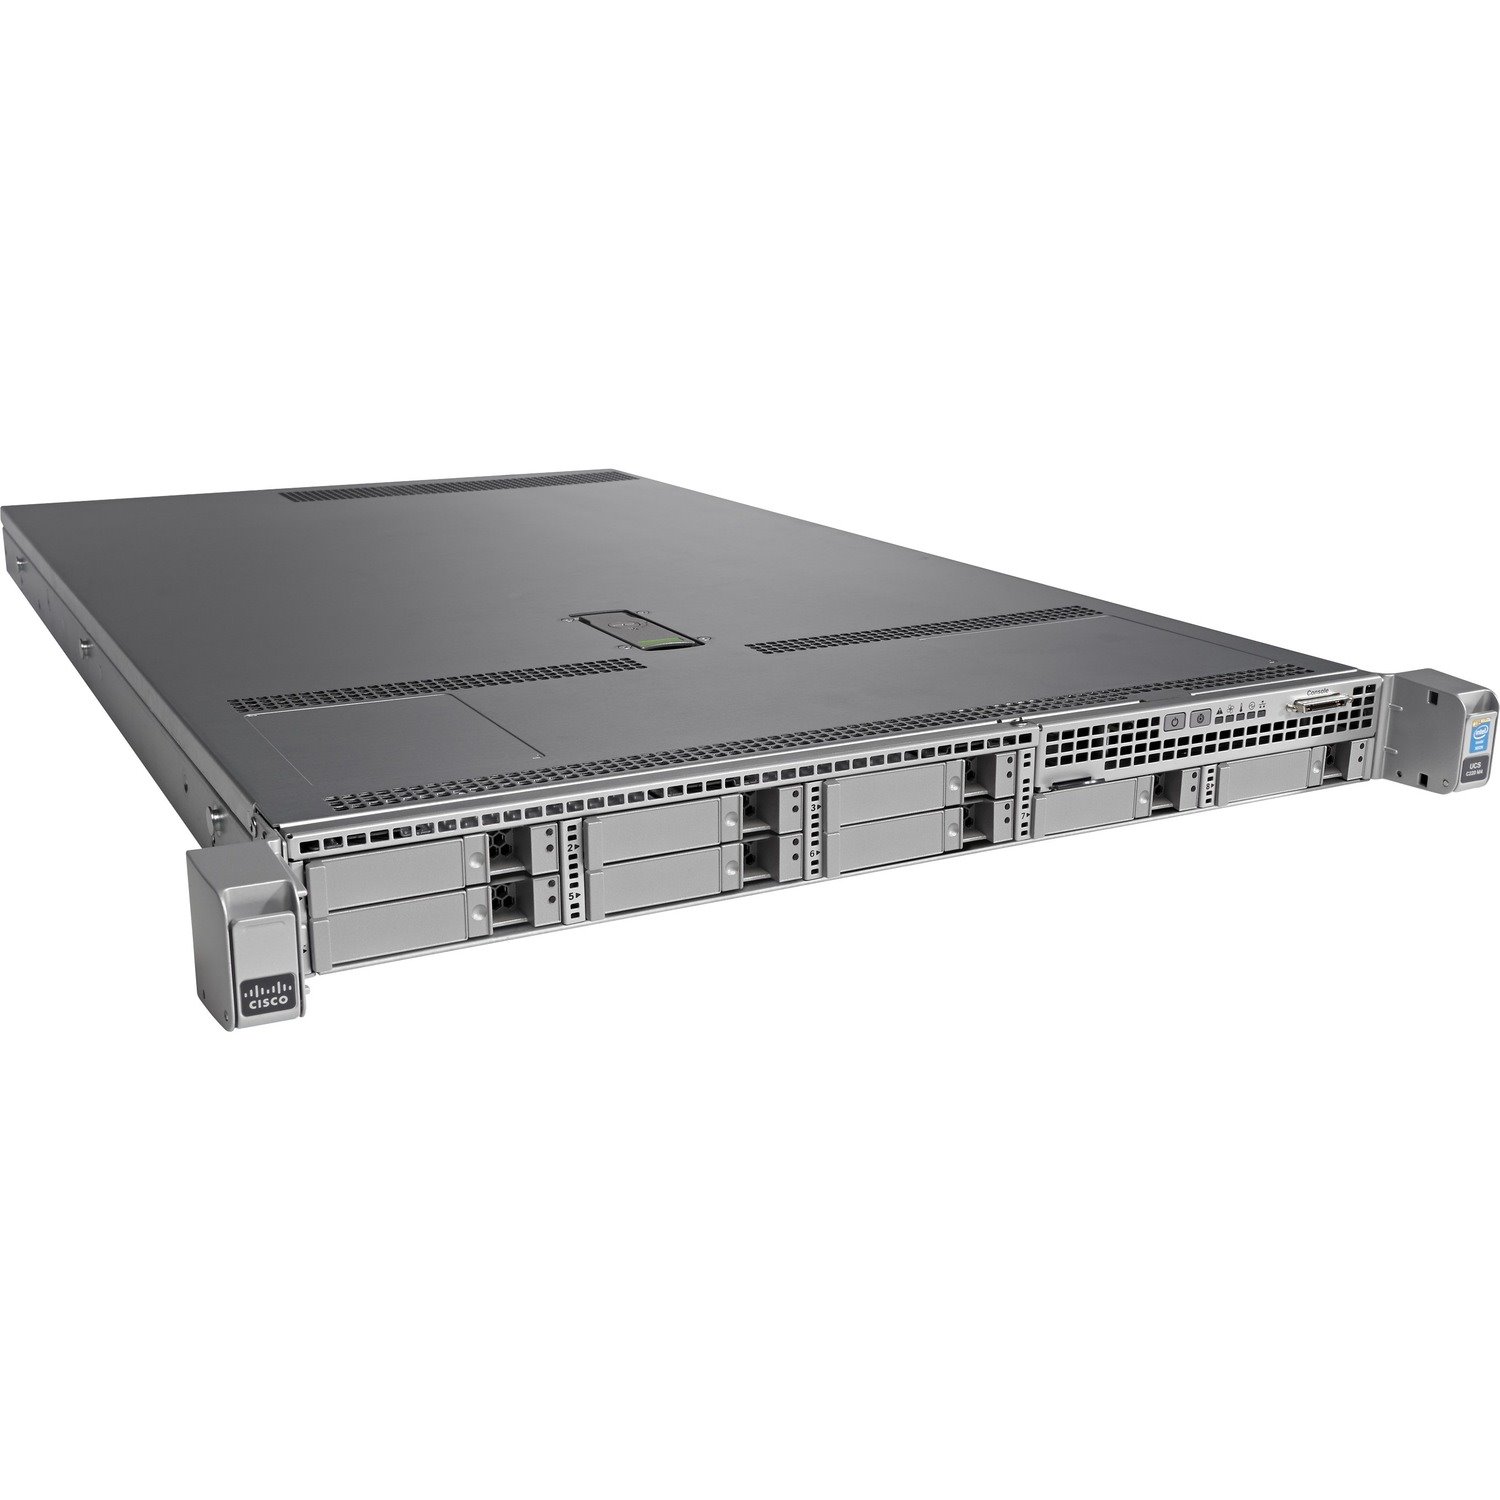 Cisco C220 M4 Rack Server - Intel Xeon E5-2620 v3 2.40 GHz - 256 GB RAM - 12Gb/s SAS, Serial ATA Controller